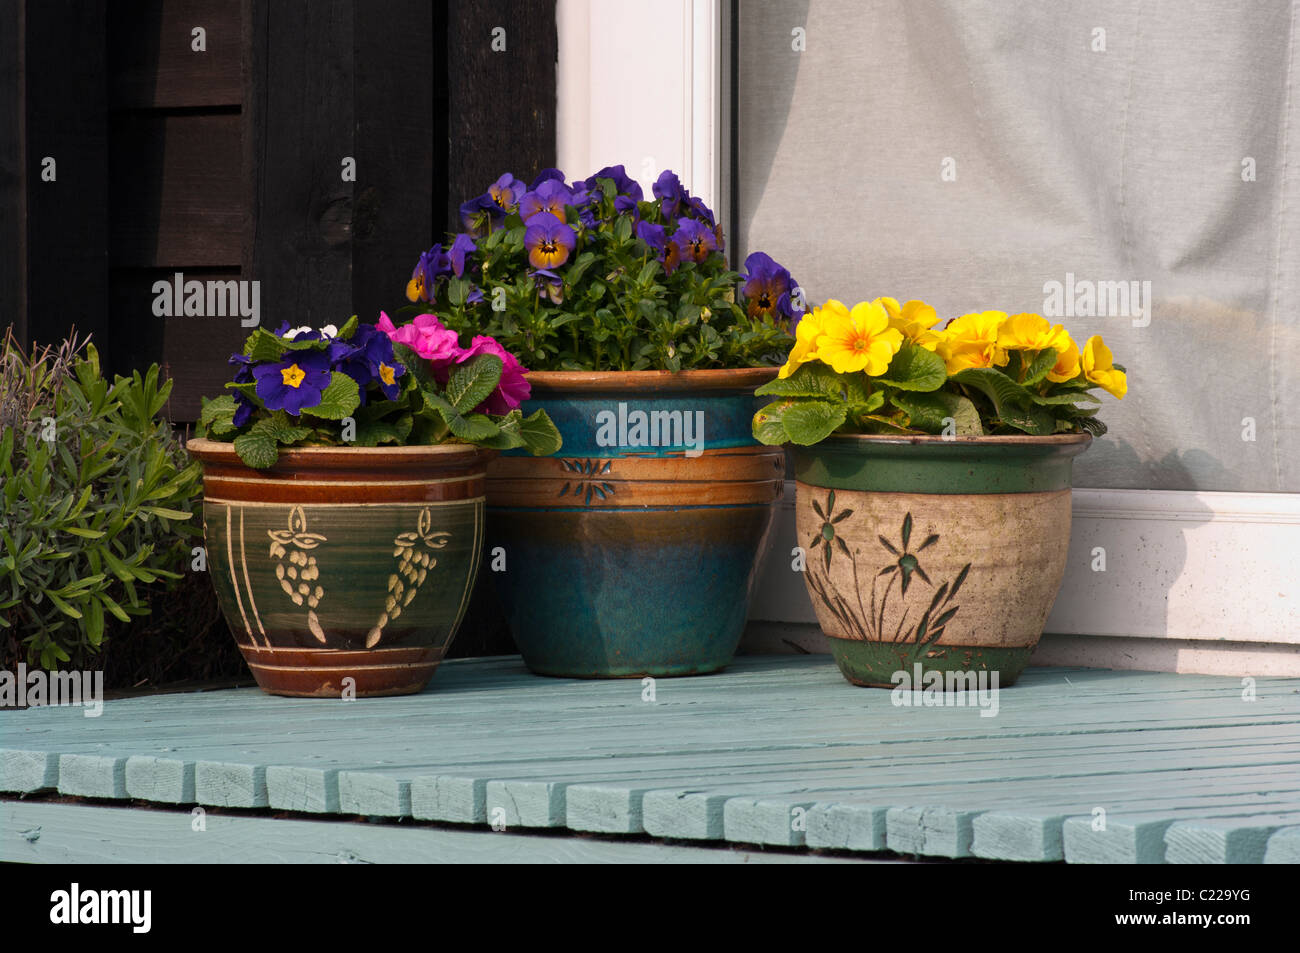 Bedding Plants In Decorative Garden Pots Stock Photo